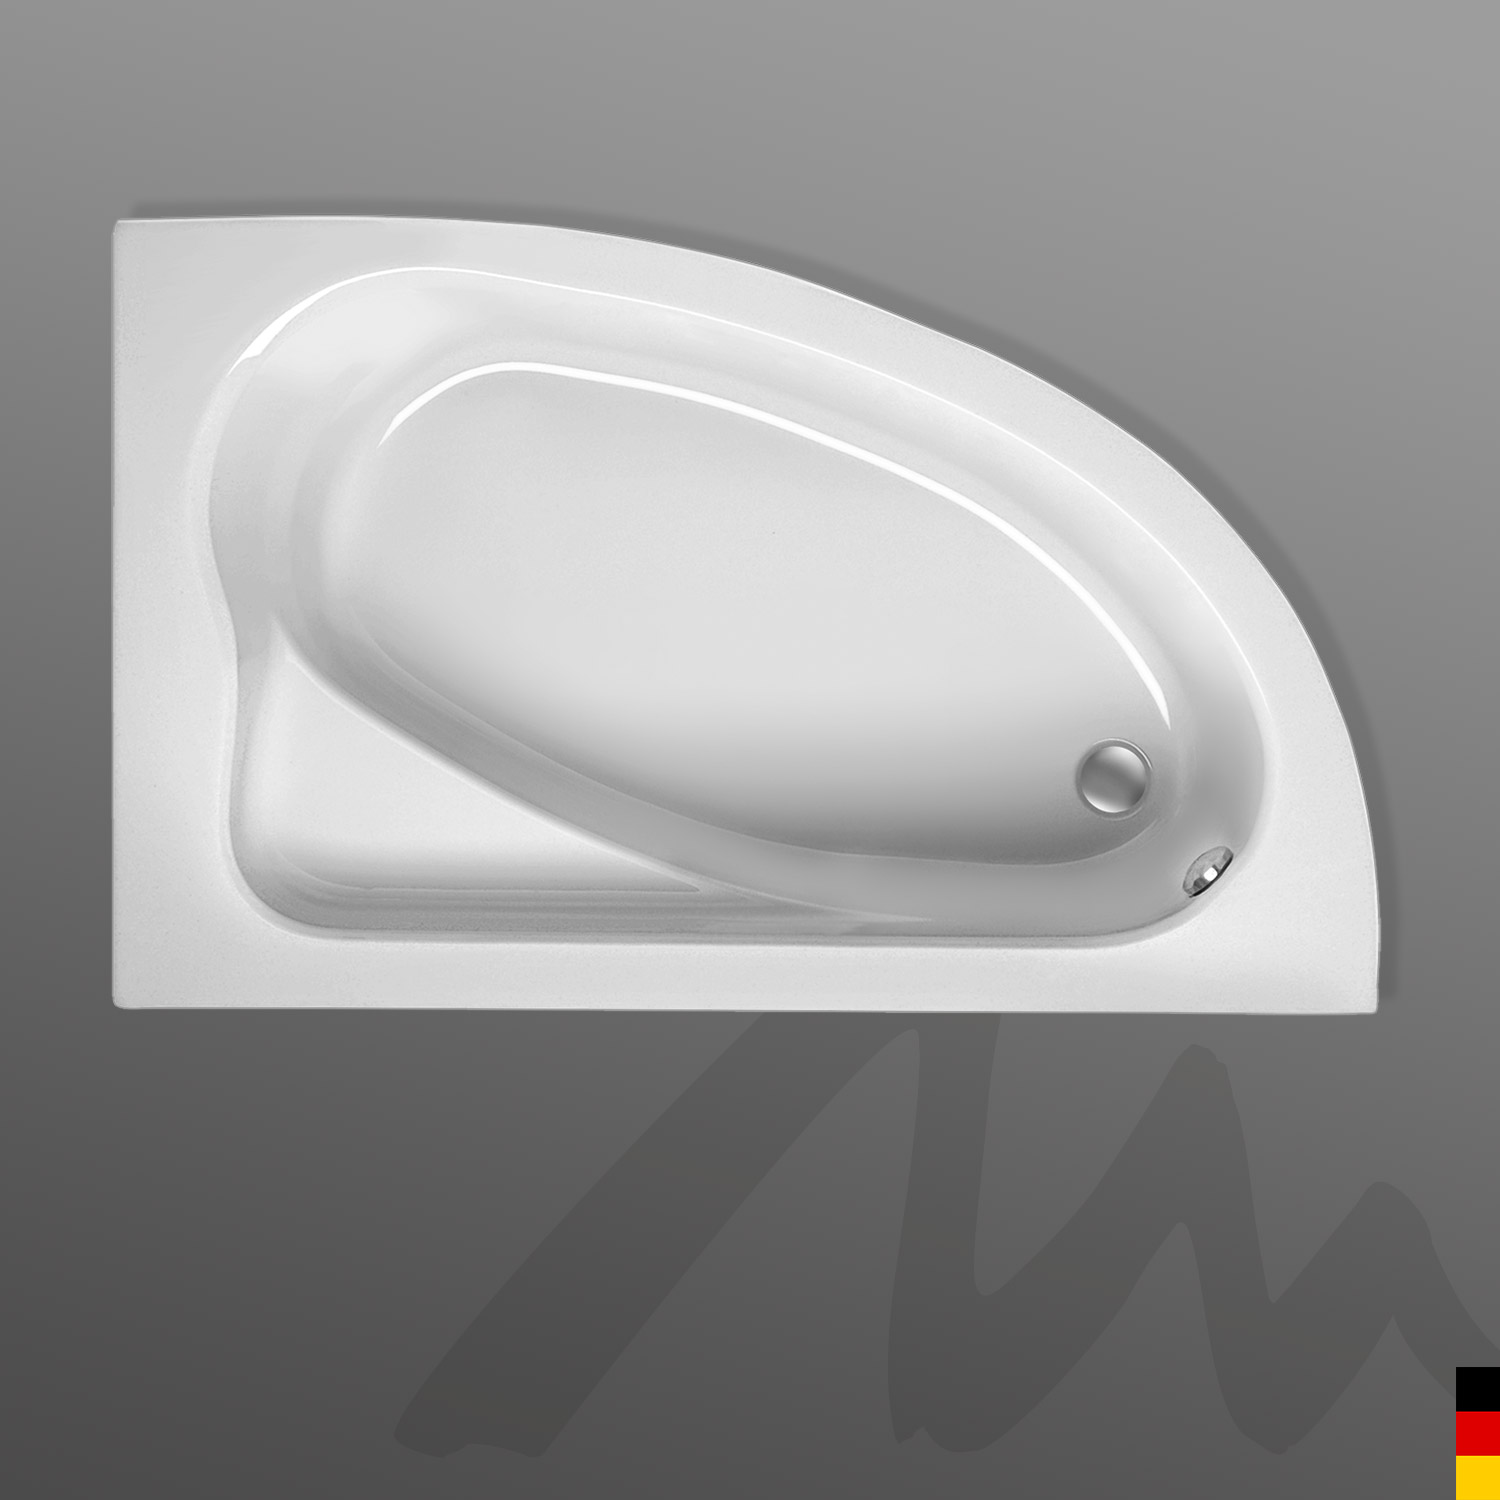 Mauersberger Badewanne Eckwanne Aspera Ausführung links 150x100x44  Farbe:weiß